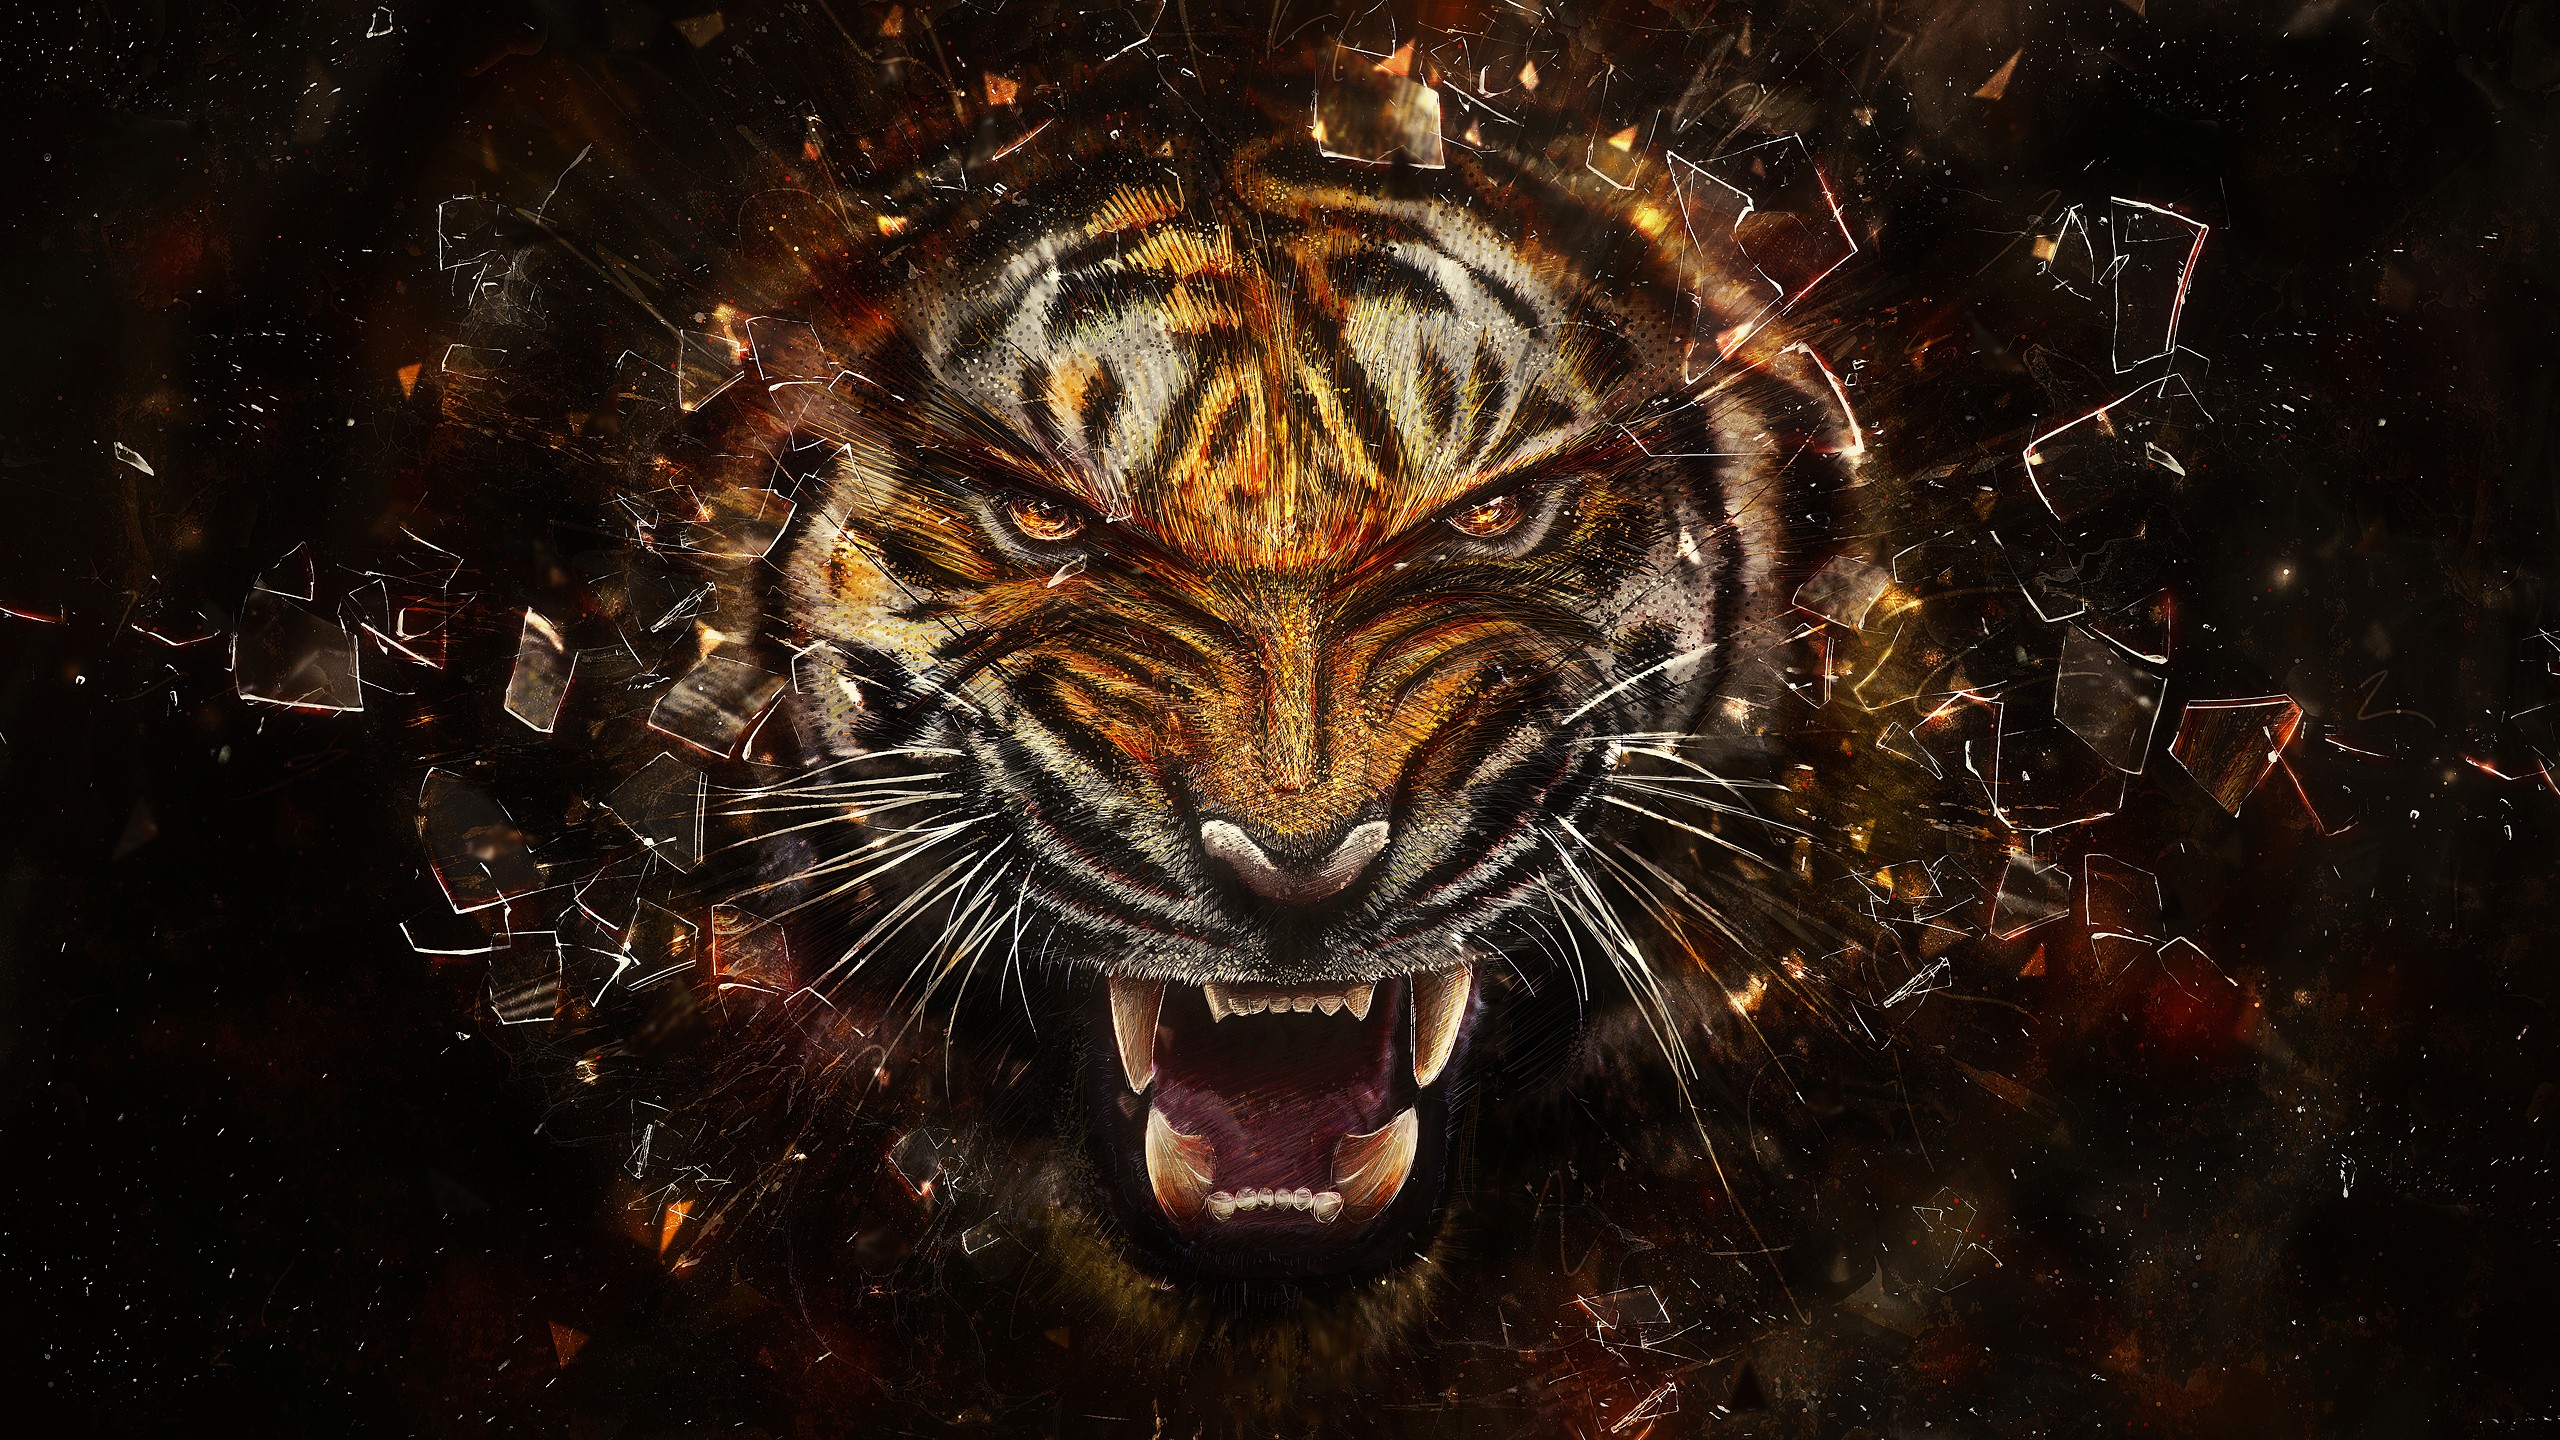 Abstract Animals Digital Art Shattered Artwork Roar 2560x1440